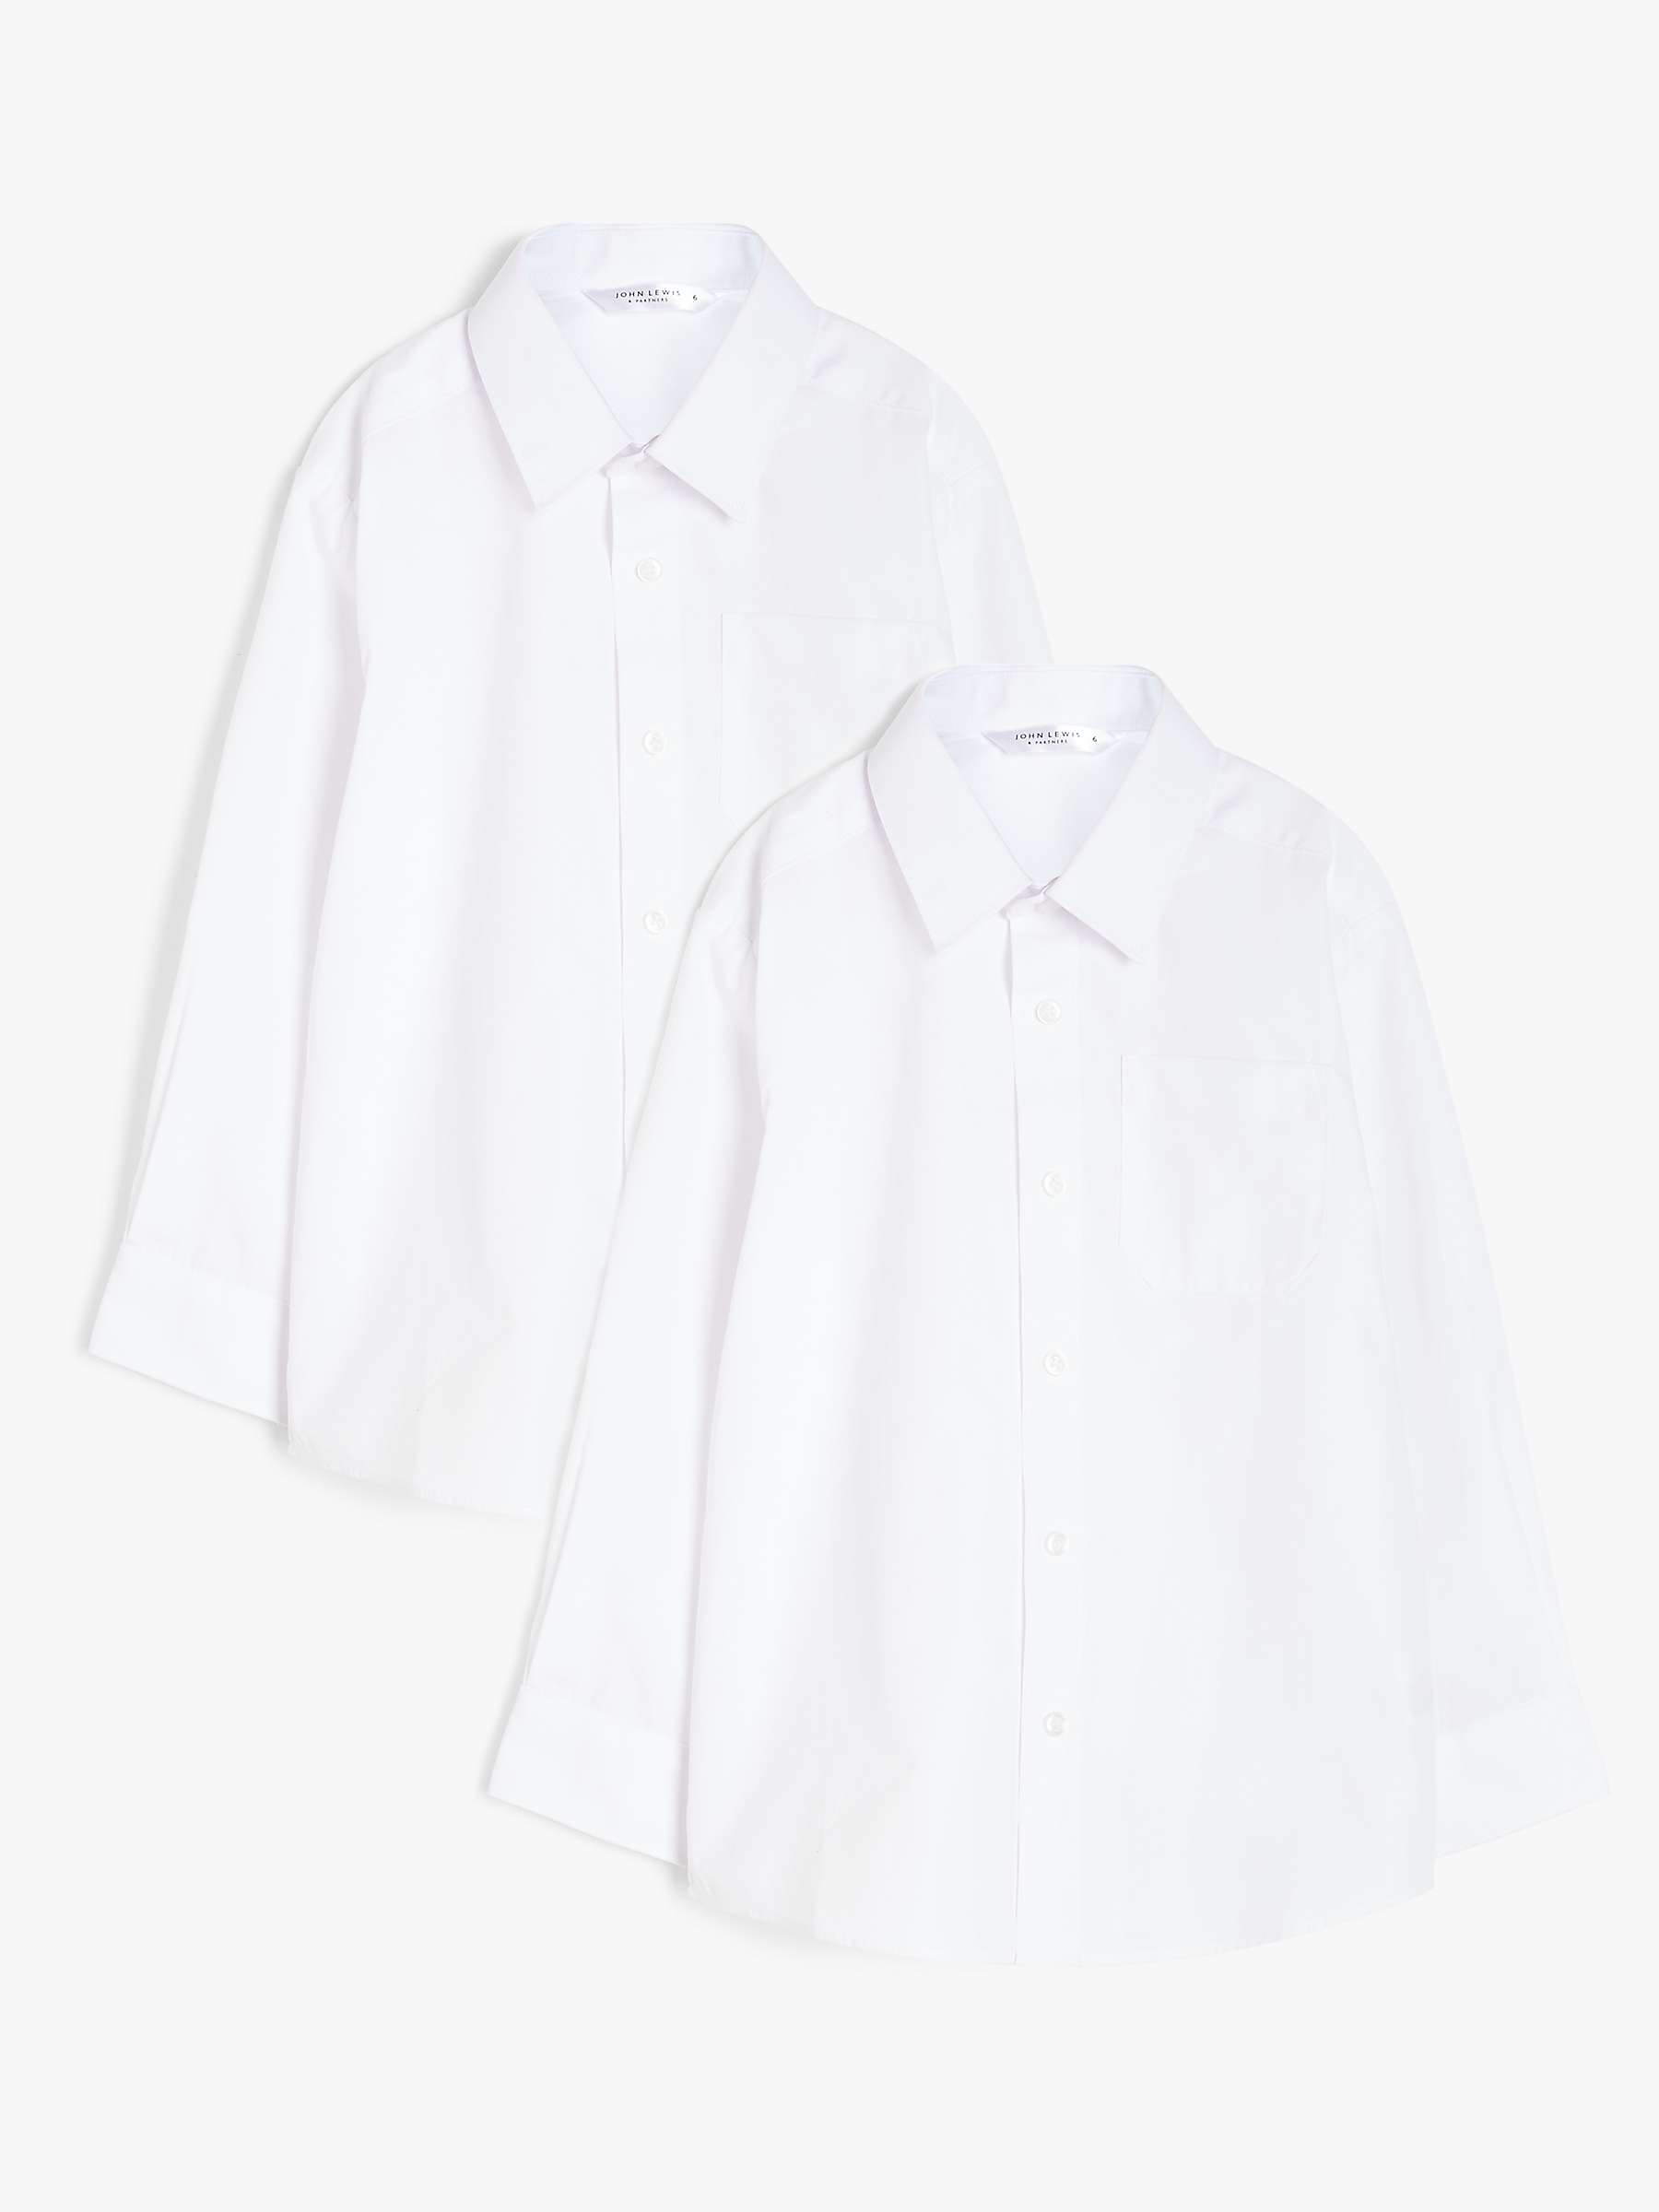 Buy John Lewis Boys' Easy Care Stain Resistant Long Sleeve School Shirt, Pack of 2 Online at johnlewis.com